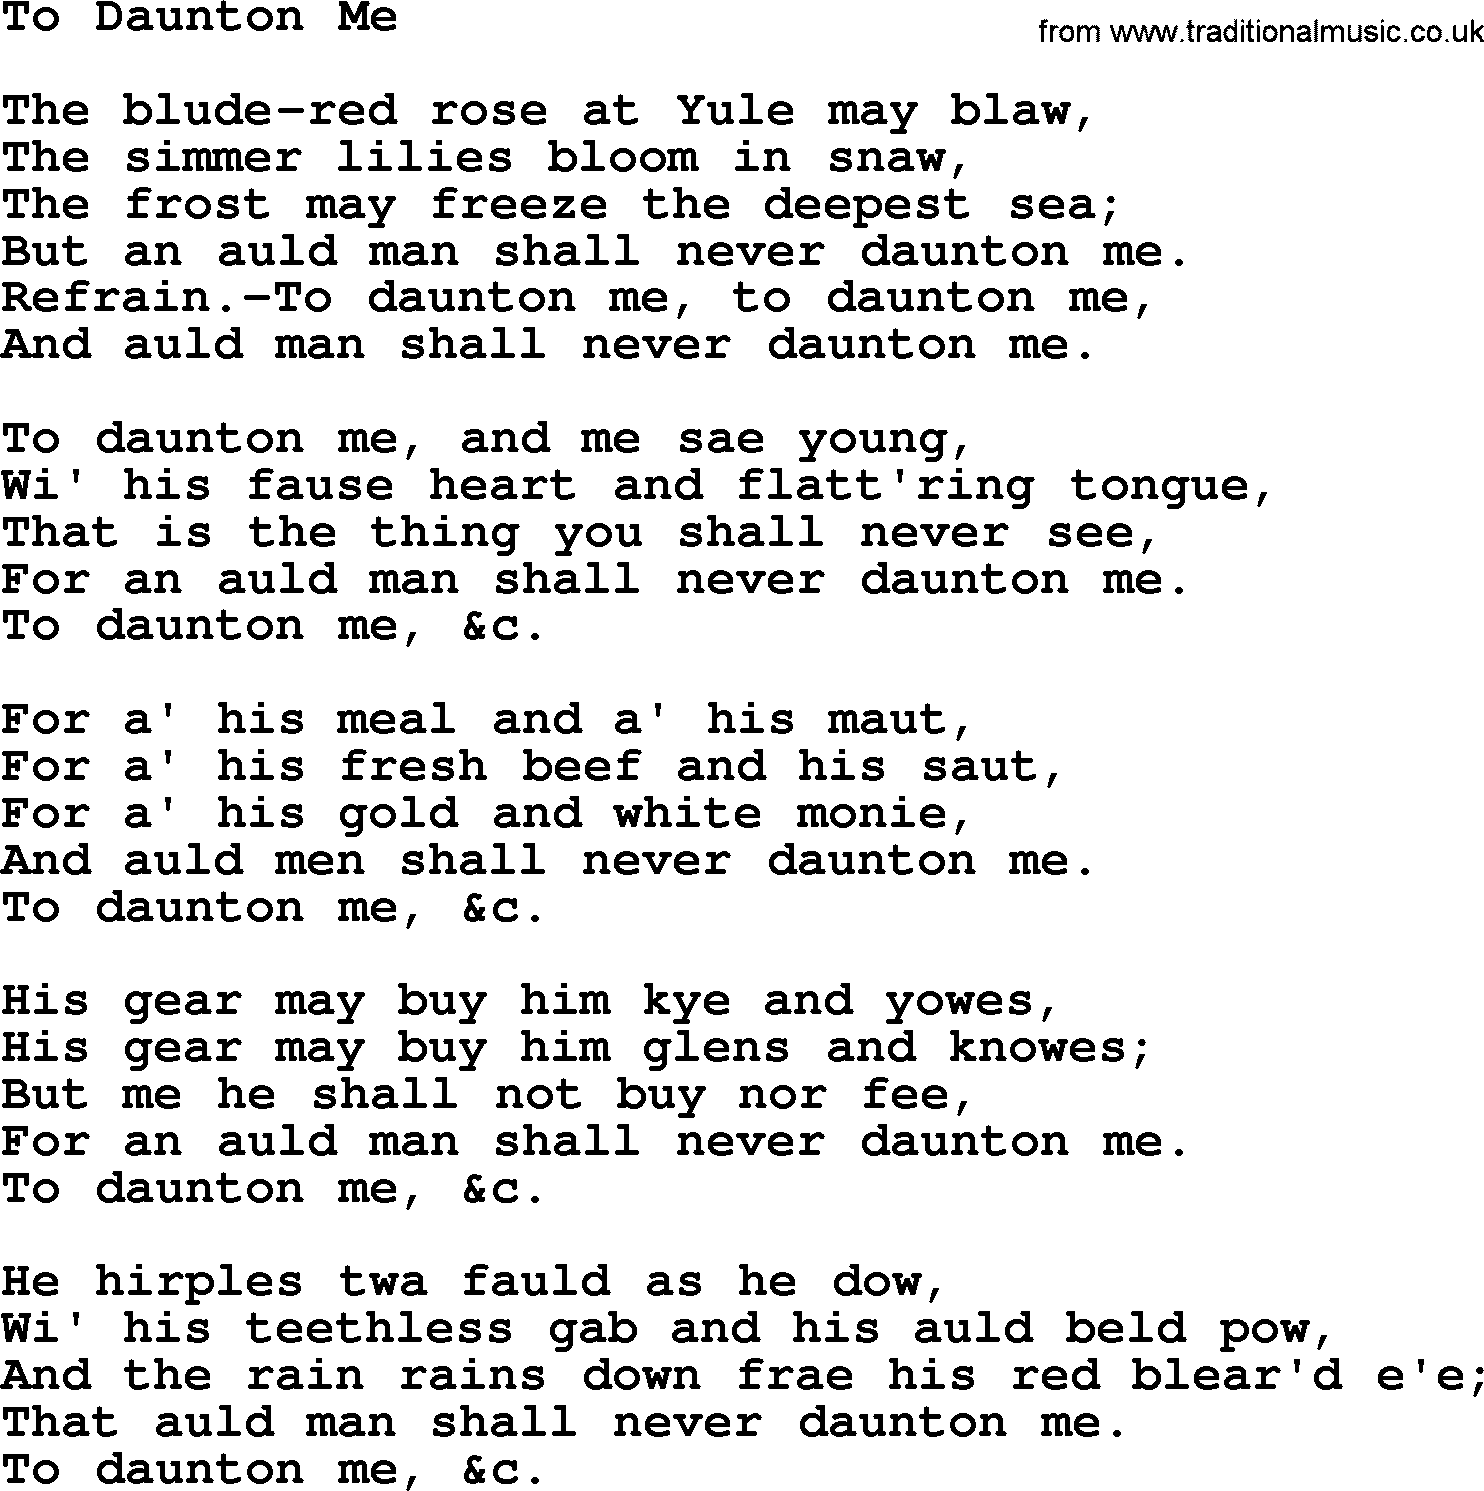 Robert Burns Songs & Lyrics: To Daunton Me